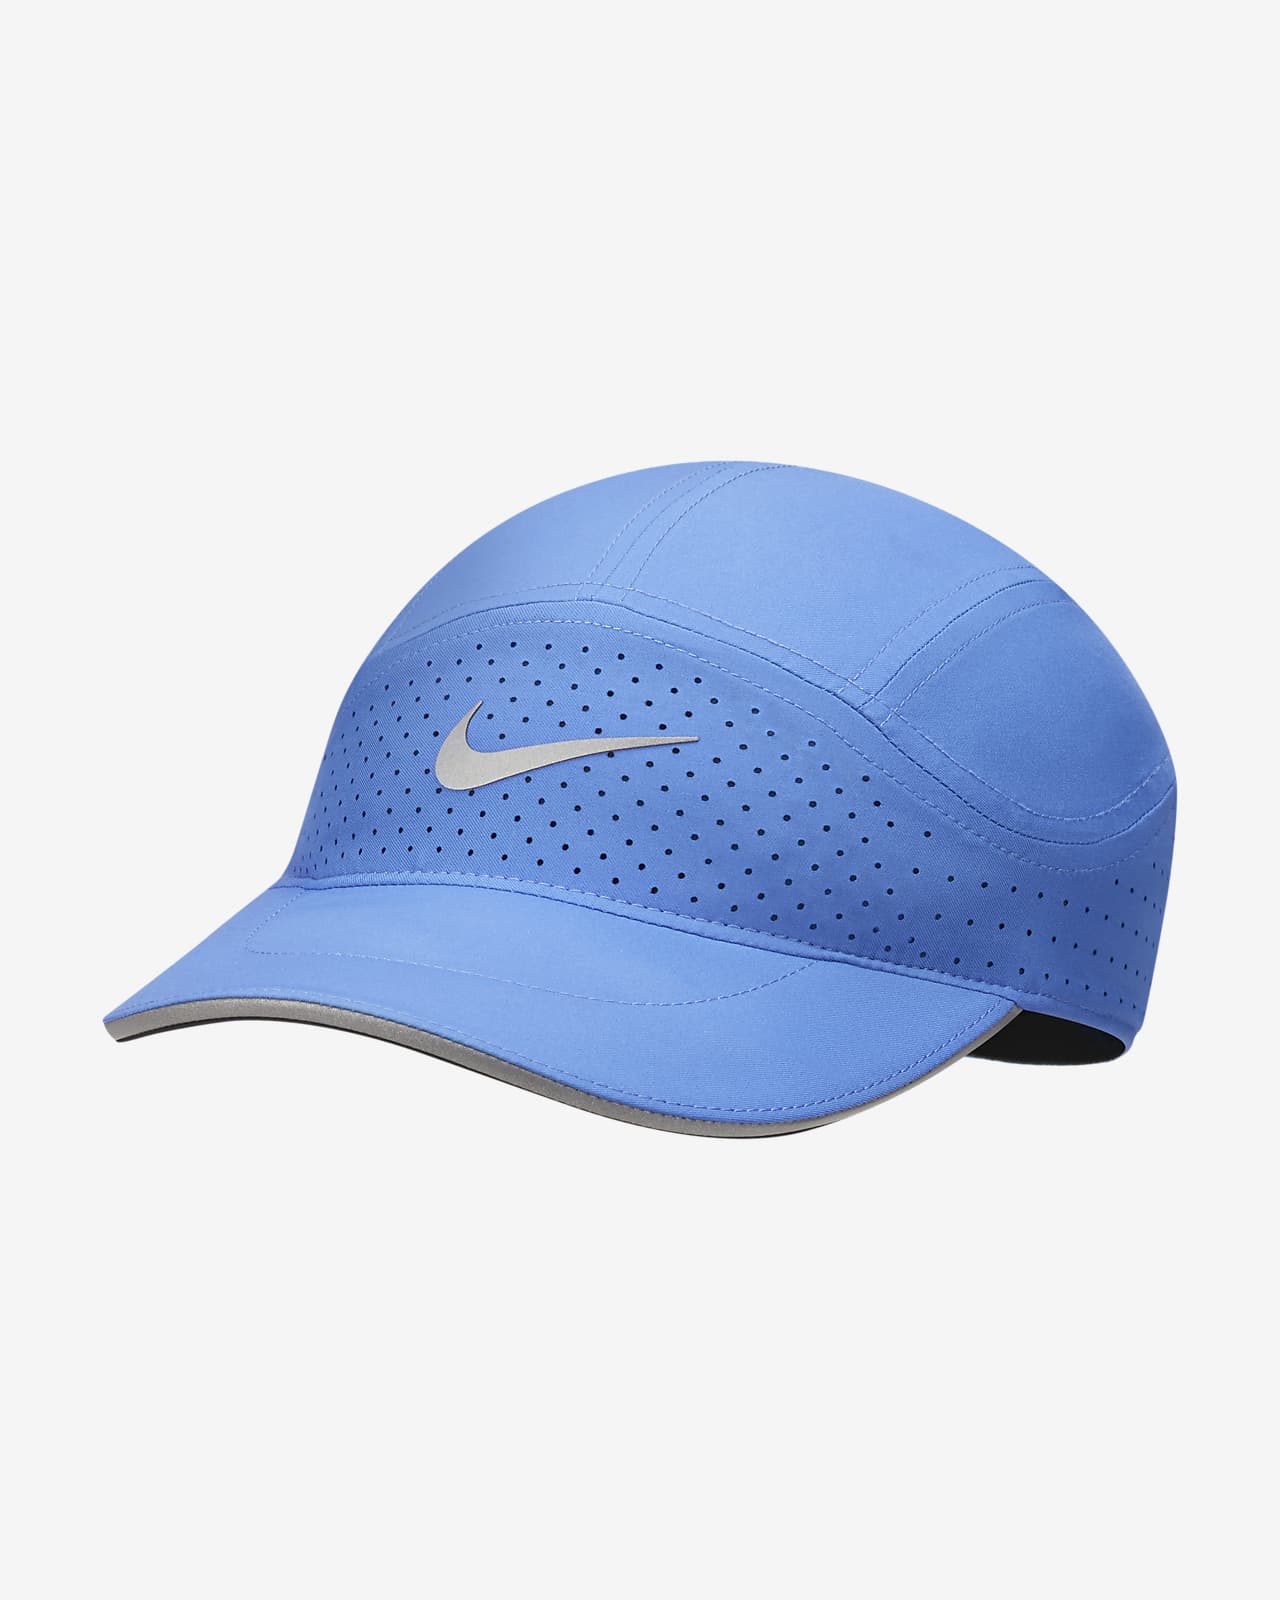 Nike AeroBill Tailwind Running Cap